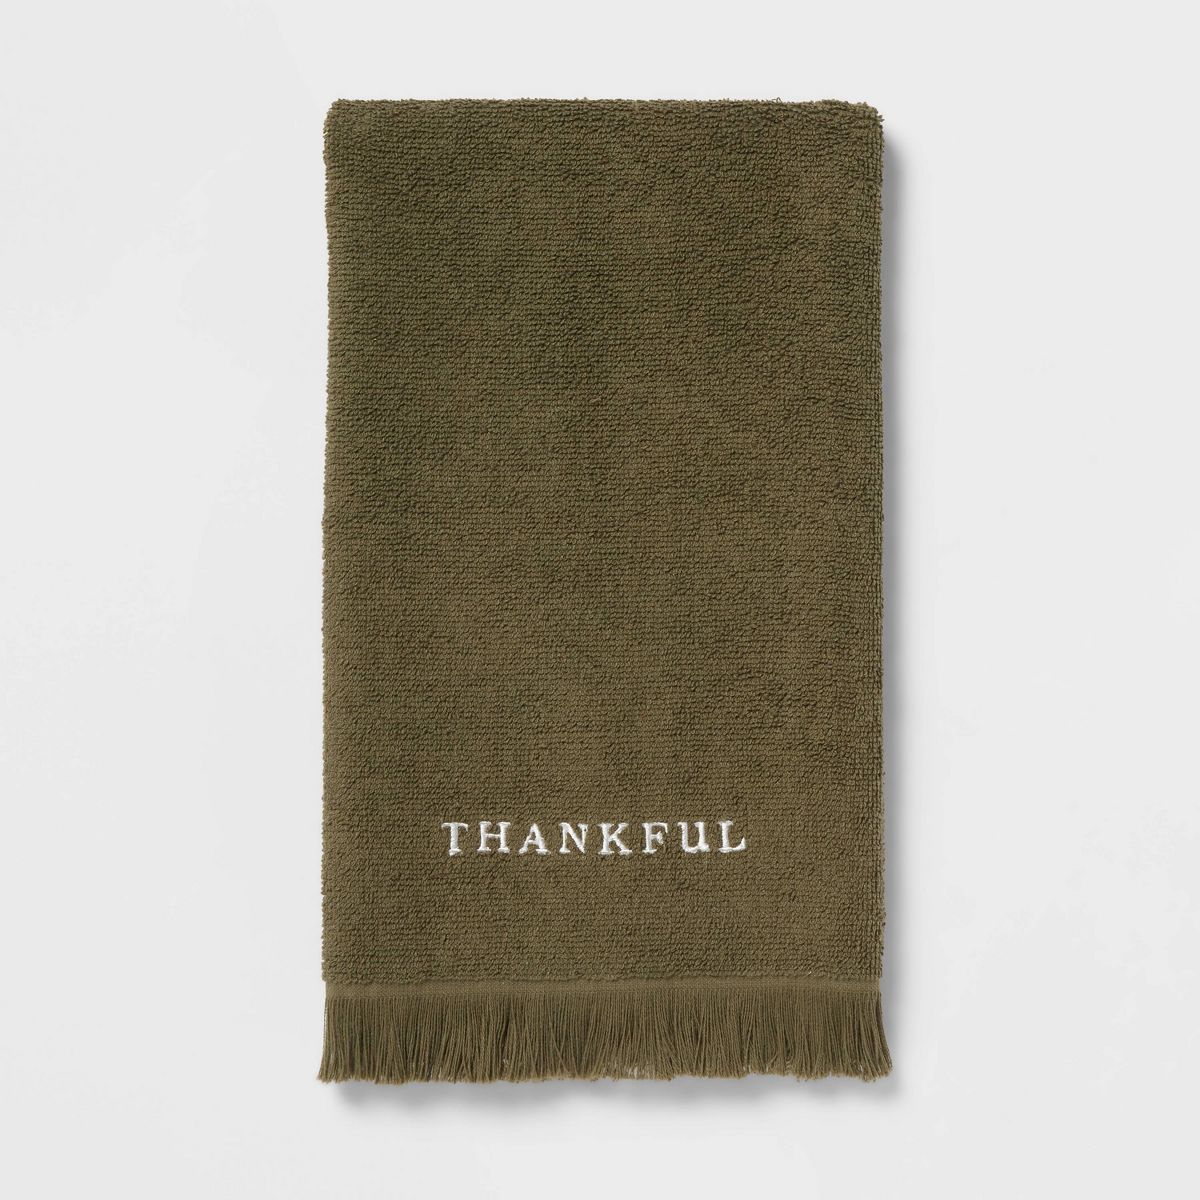 Harvest Embroidered Thankful Hand Towel Dark Green - Threshold™ | Target